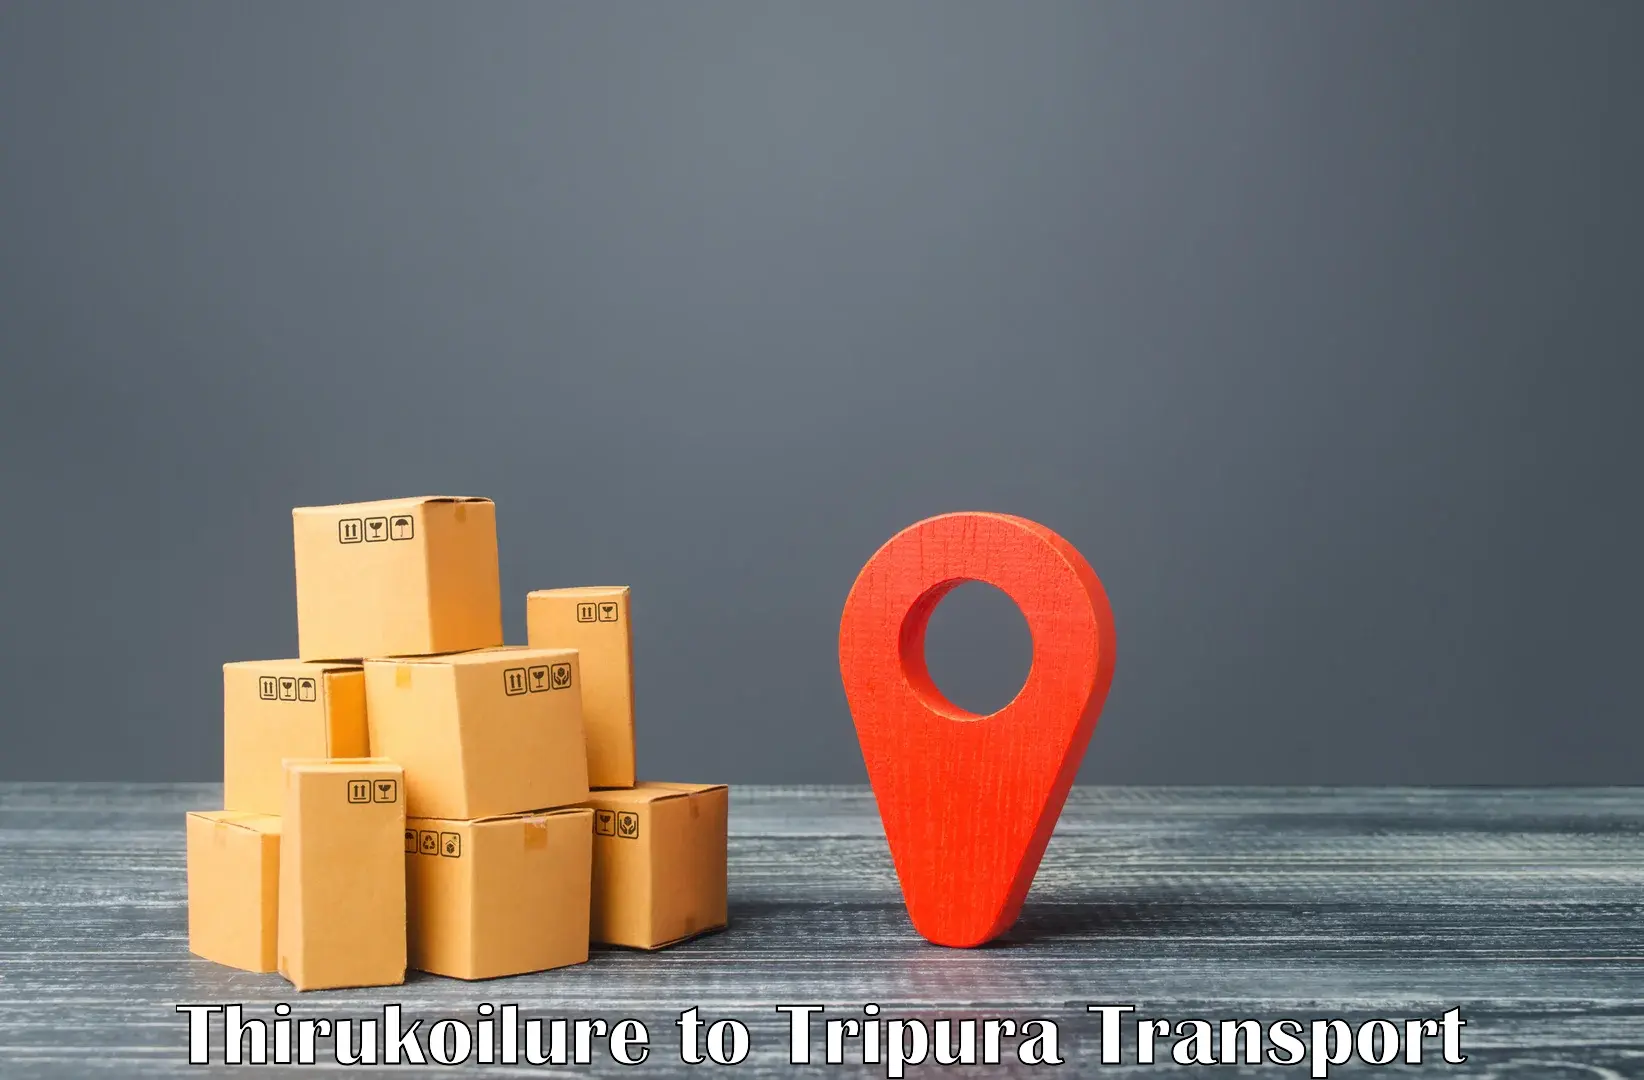 Pick up transport service Thirukoilure to North Tripura